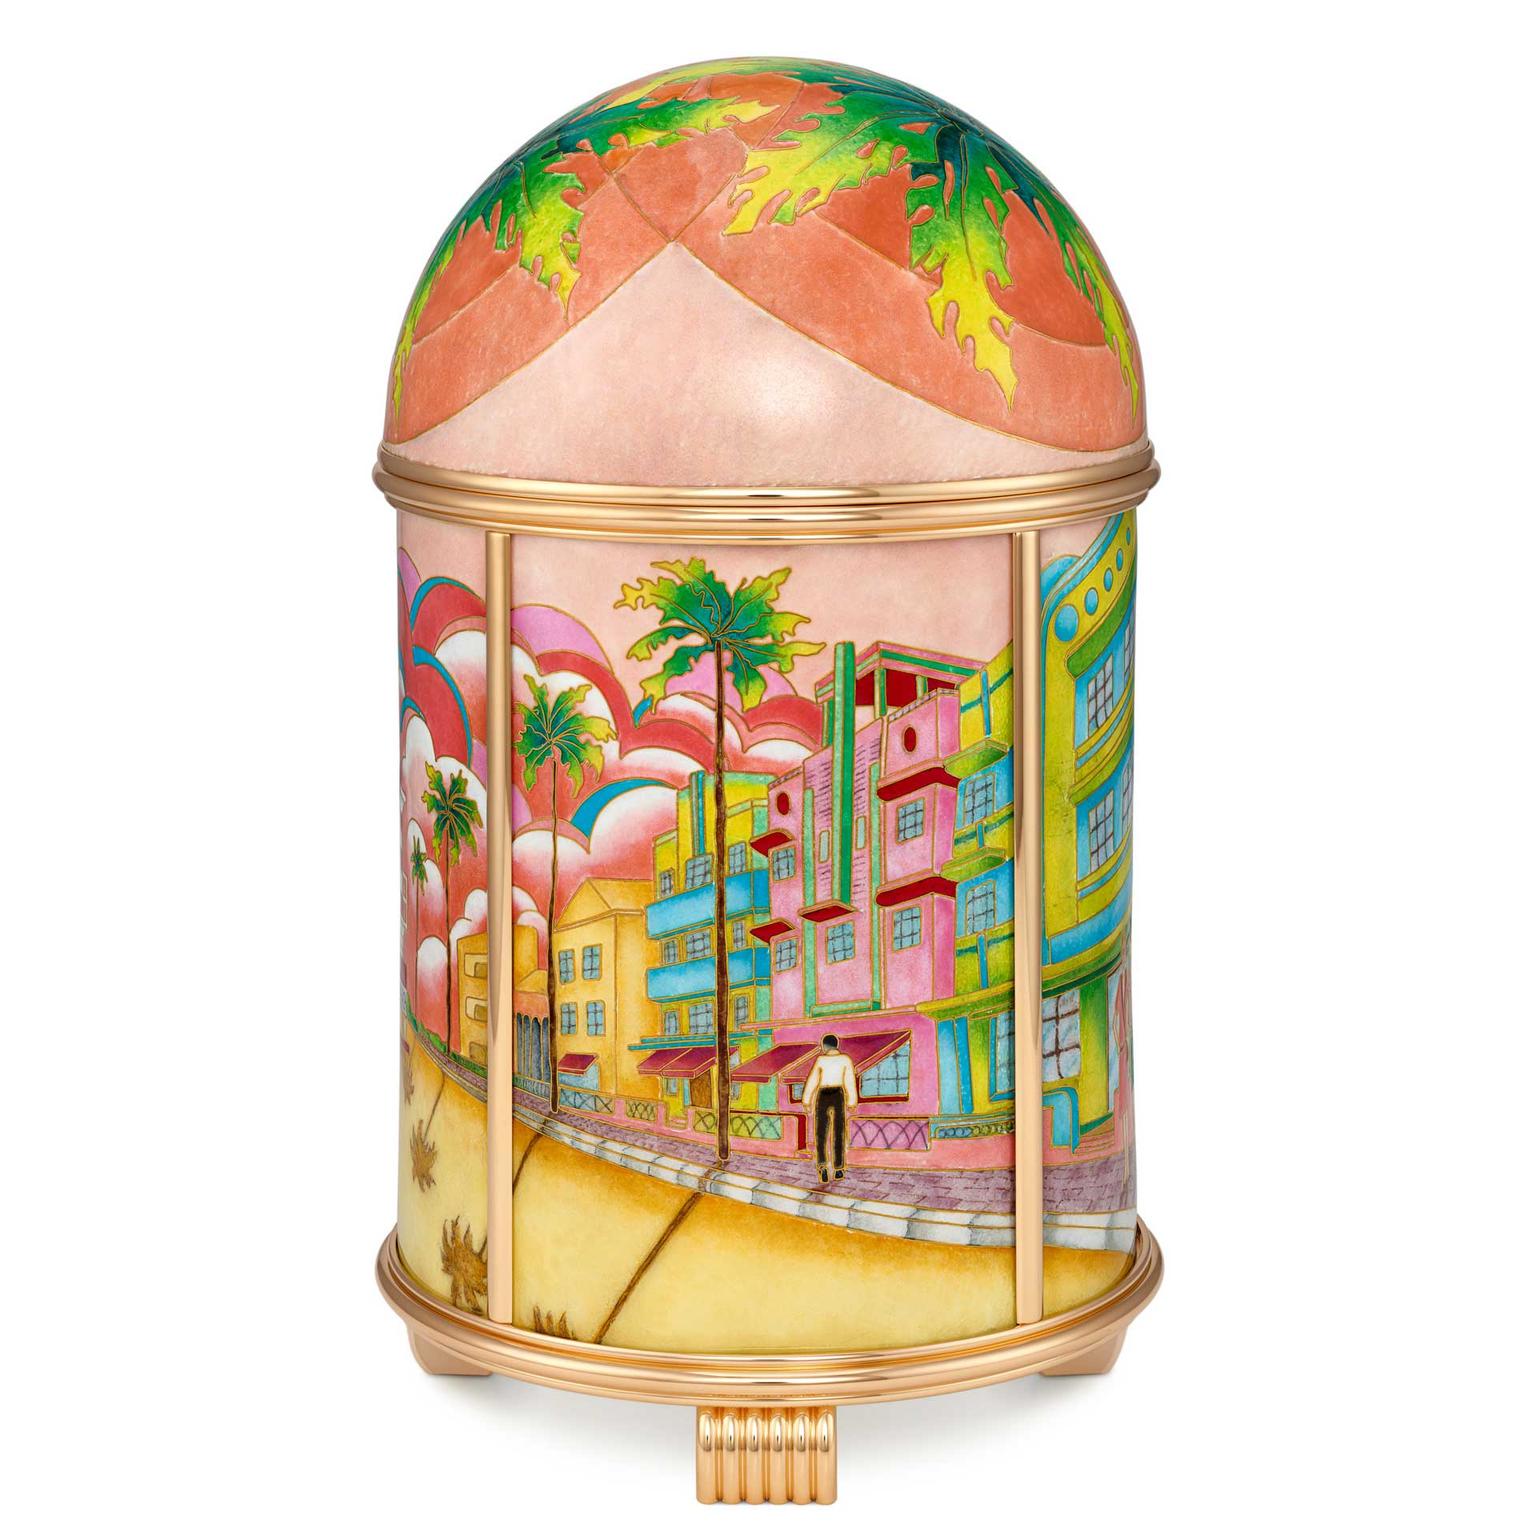 Patek Philippe Miami Beach Dome clock